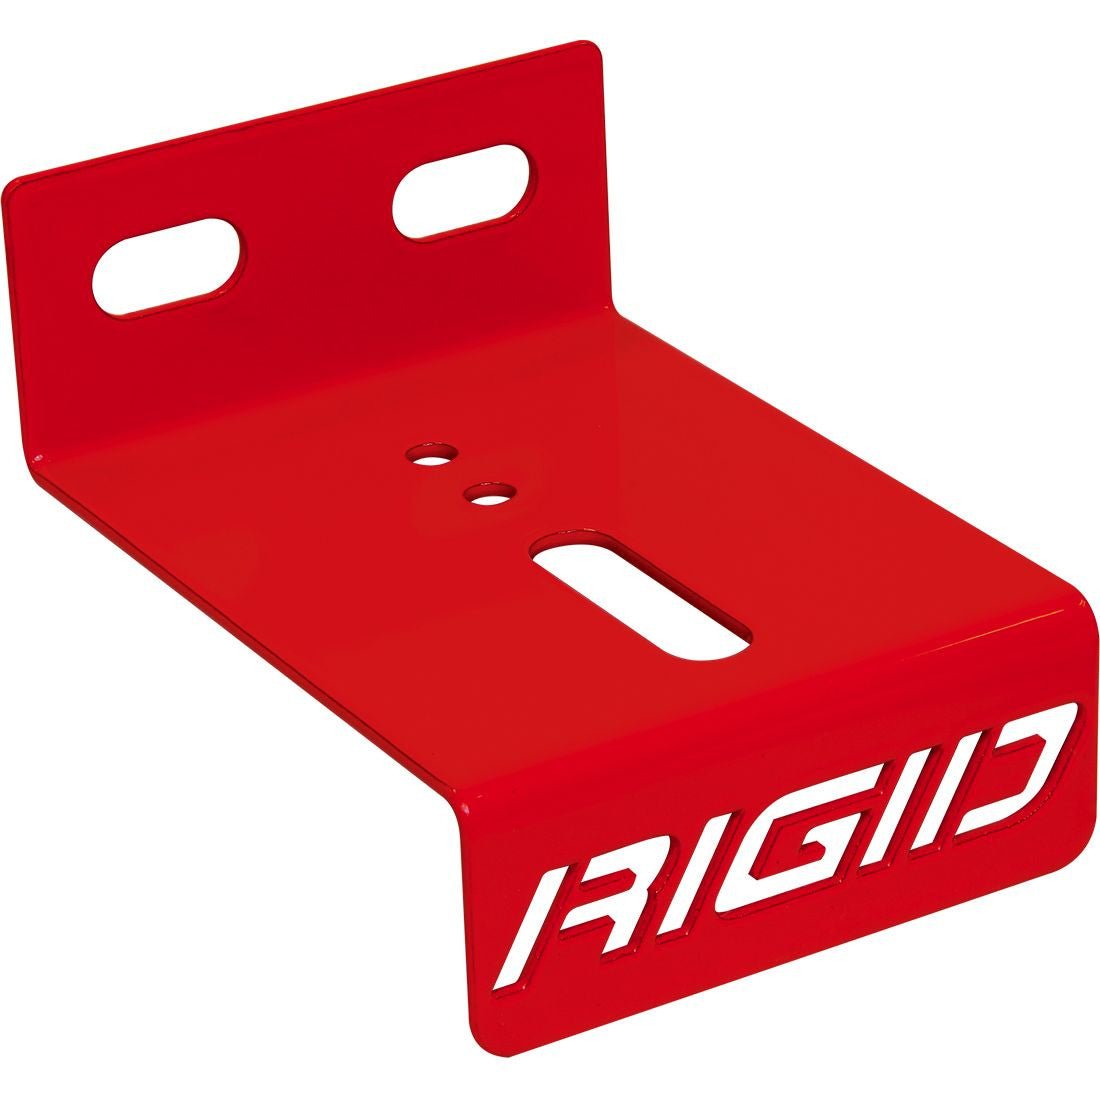 RIGID Industries Slat Wall Light Mounting Bracket, Stainless Steel Red Powder Coat, Single